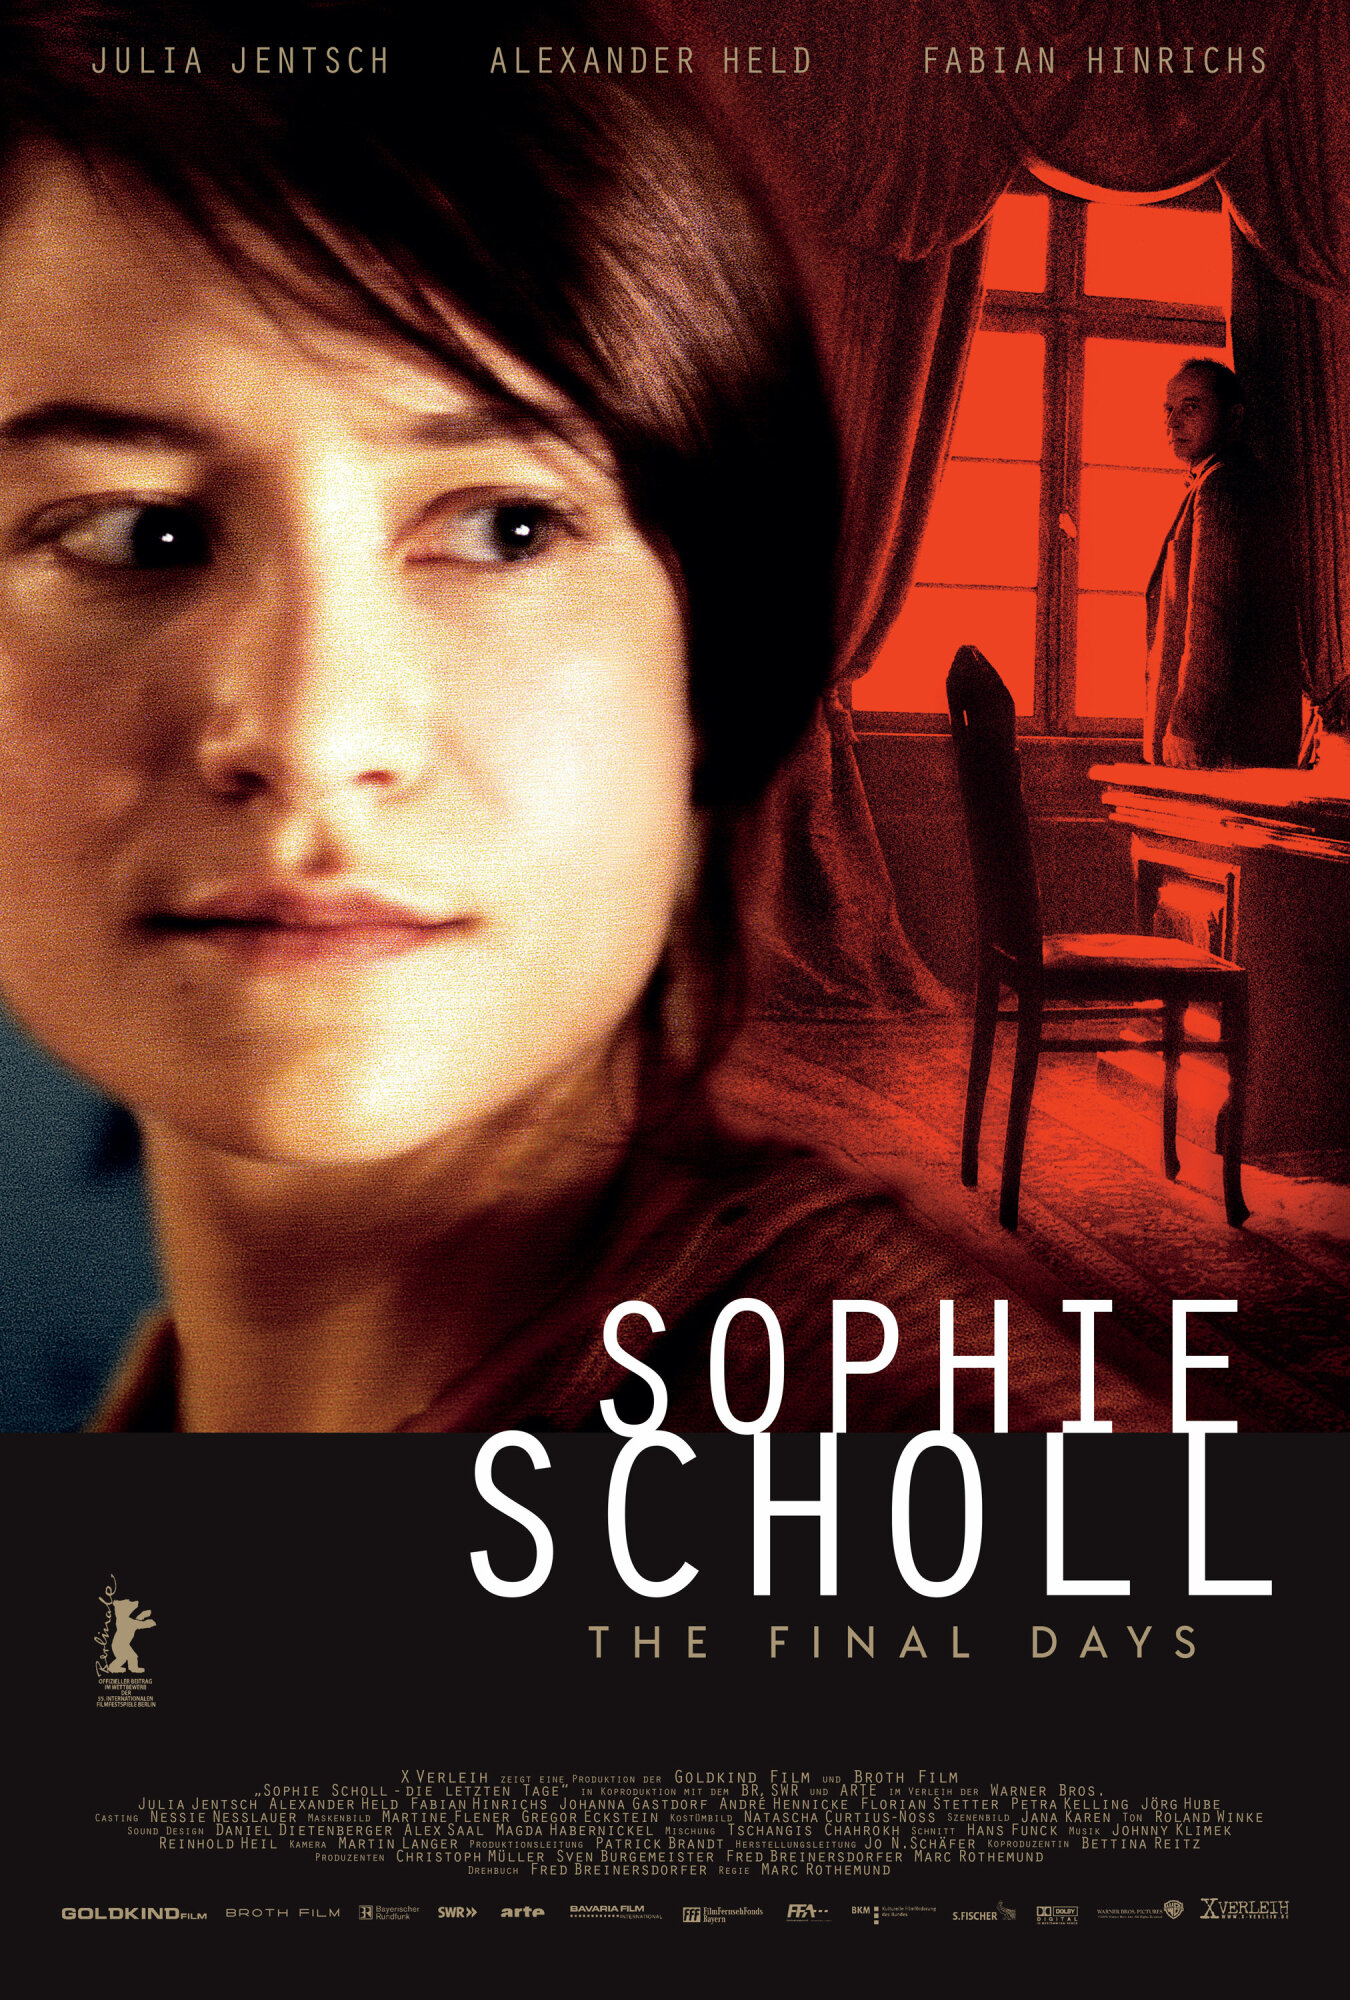 SOPHIE SCHOLL